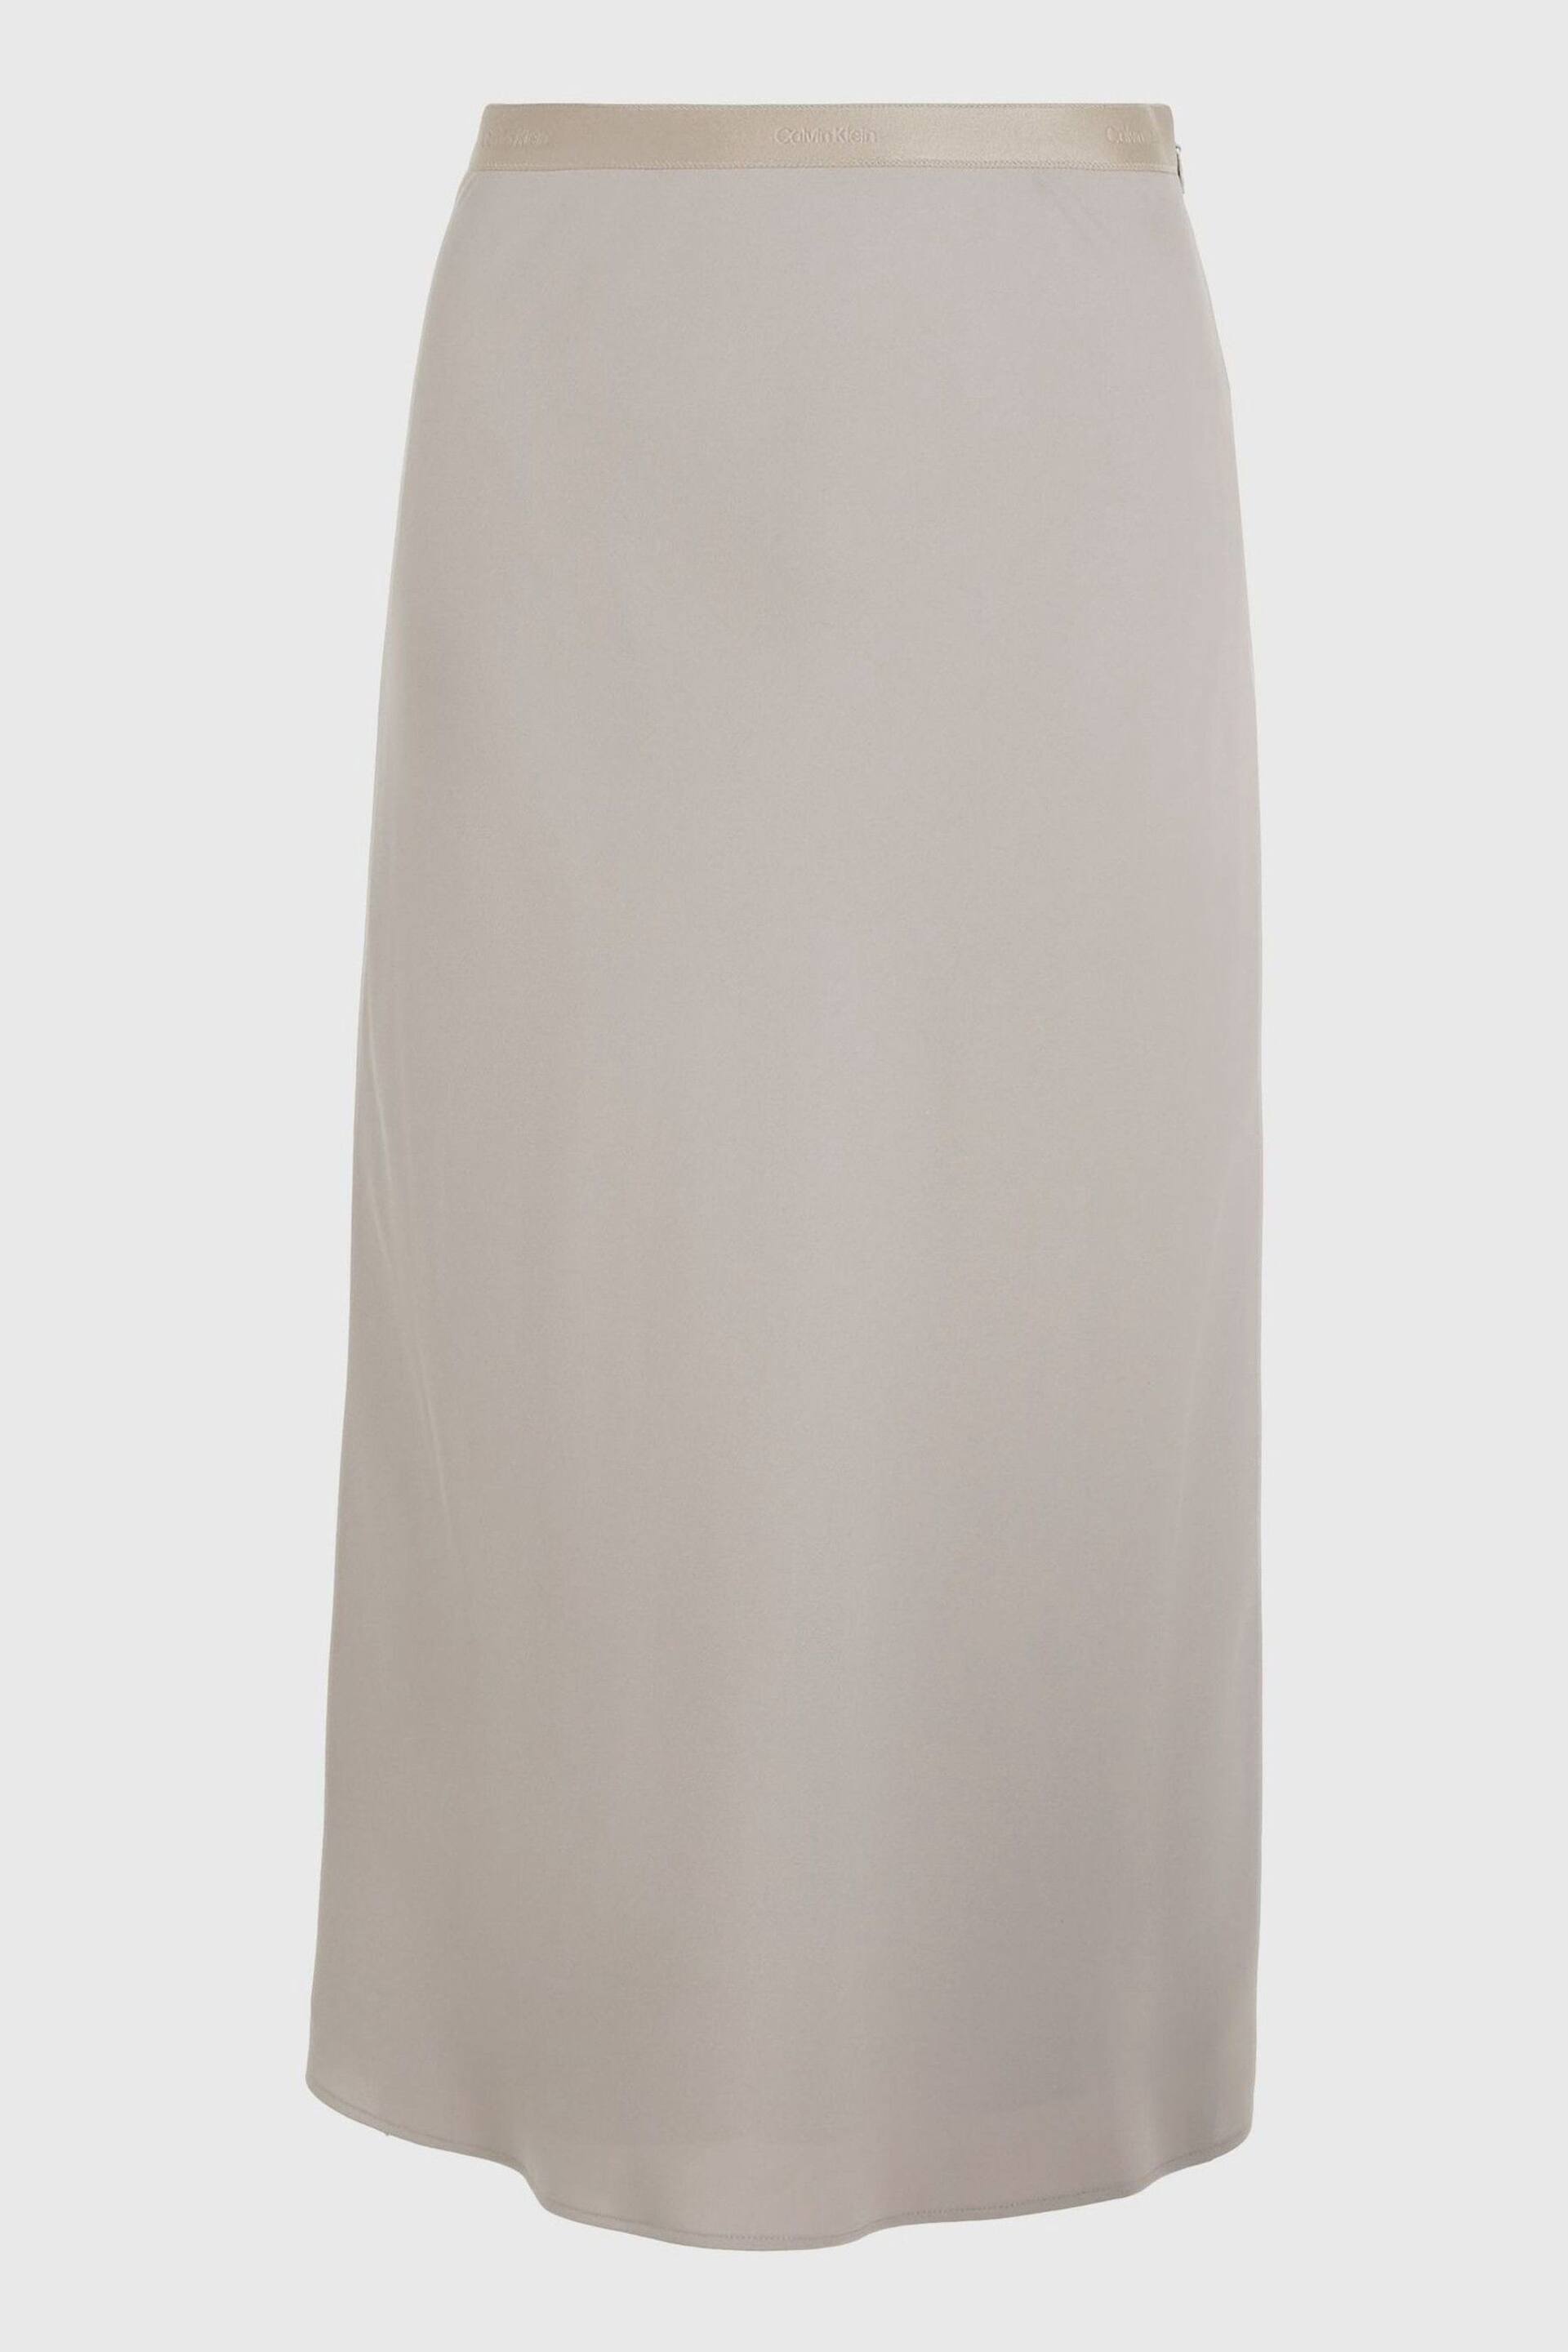 Calvin Klein Grey Recycled Midi Skirt - Image 5 of 5